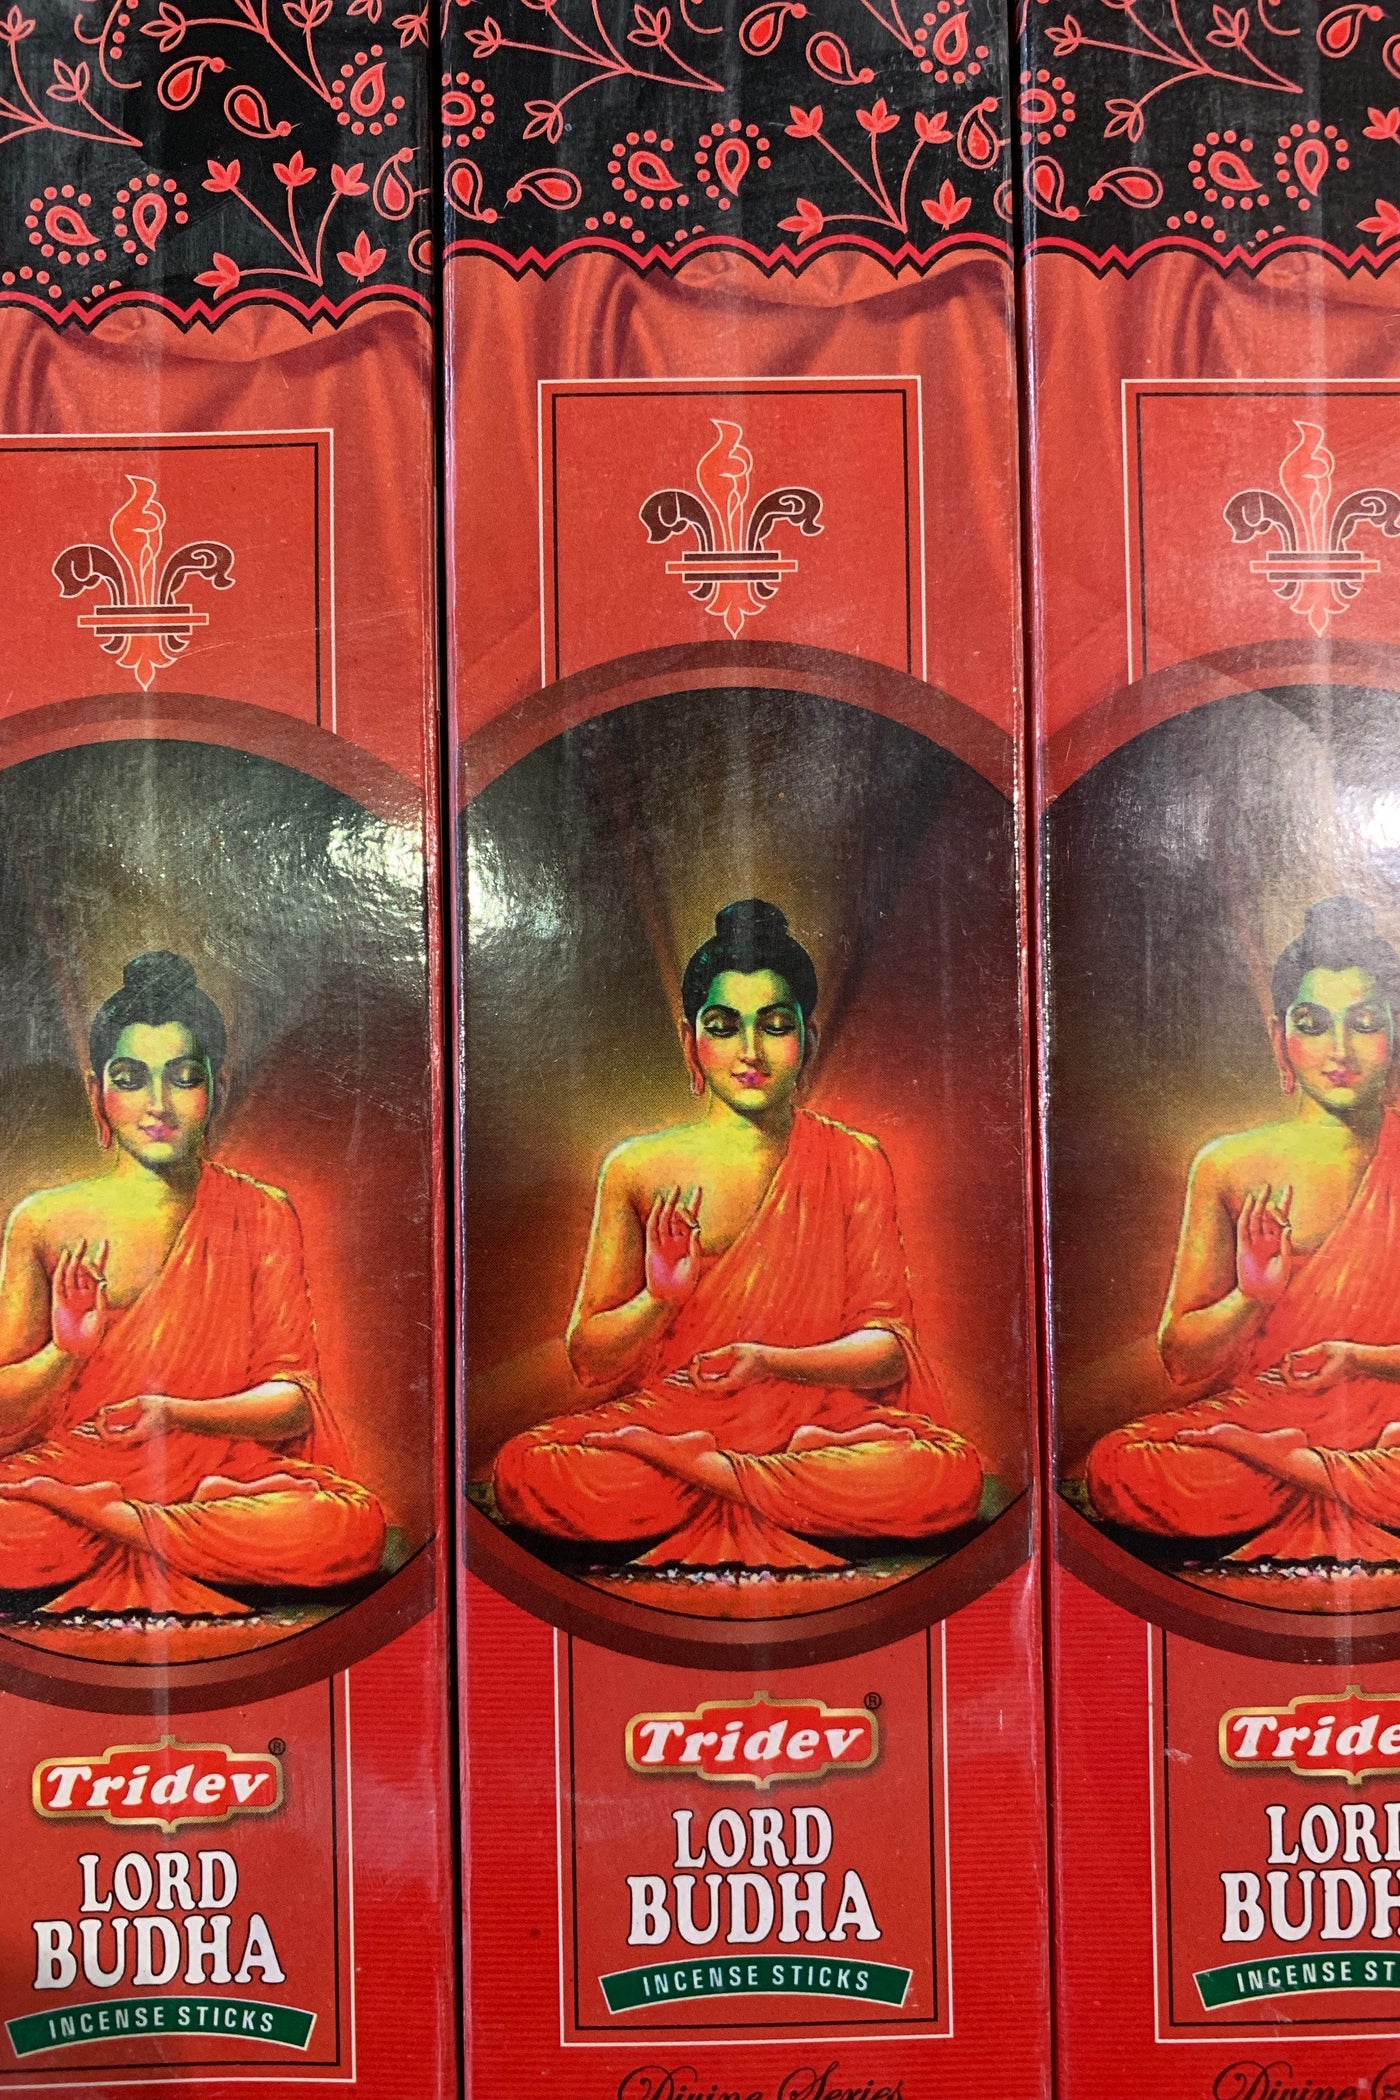 Lord Buddha incense